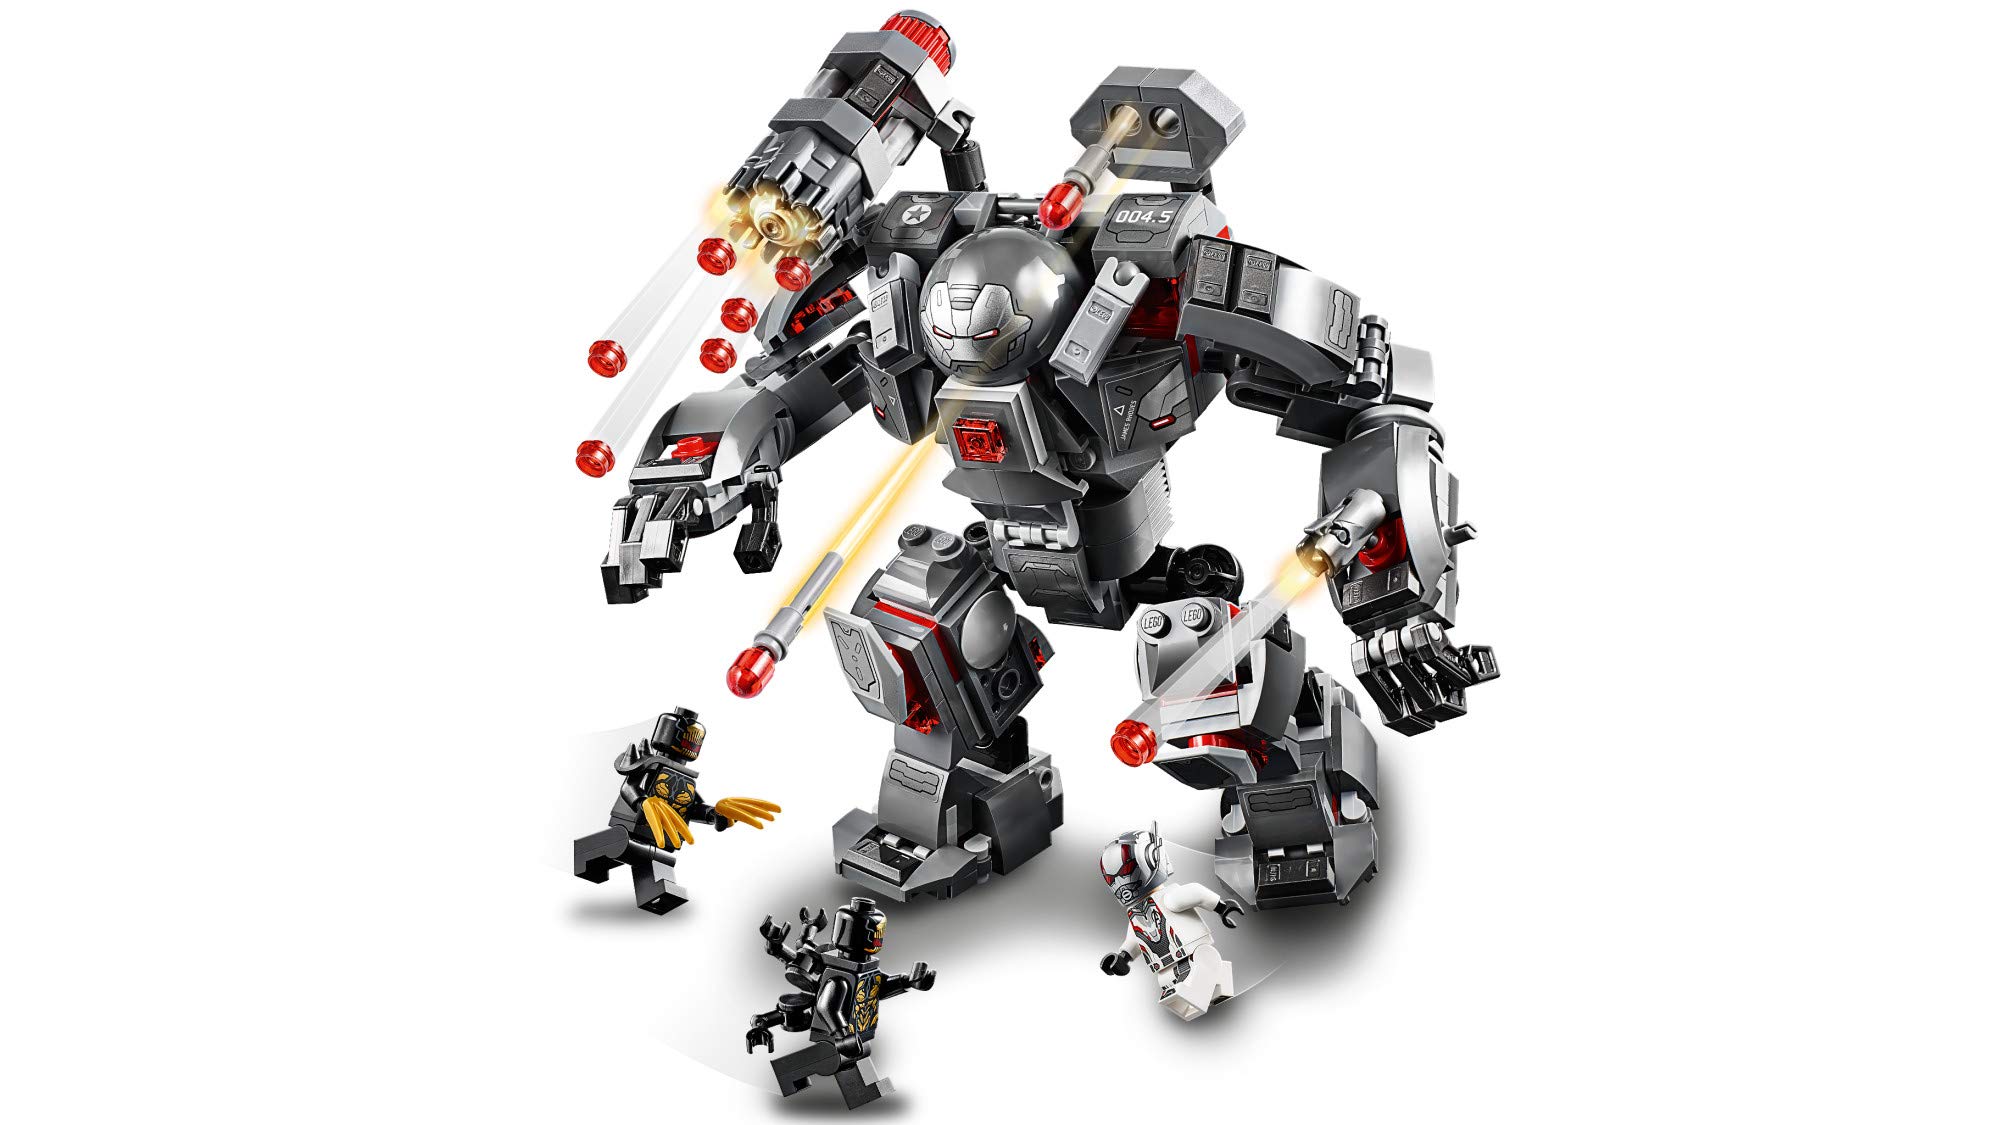 LEGO Marvel Avengers War Machine Buster 76124 Building Kit (362 Pieces)